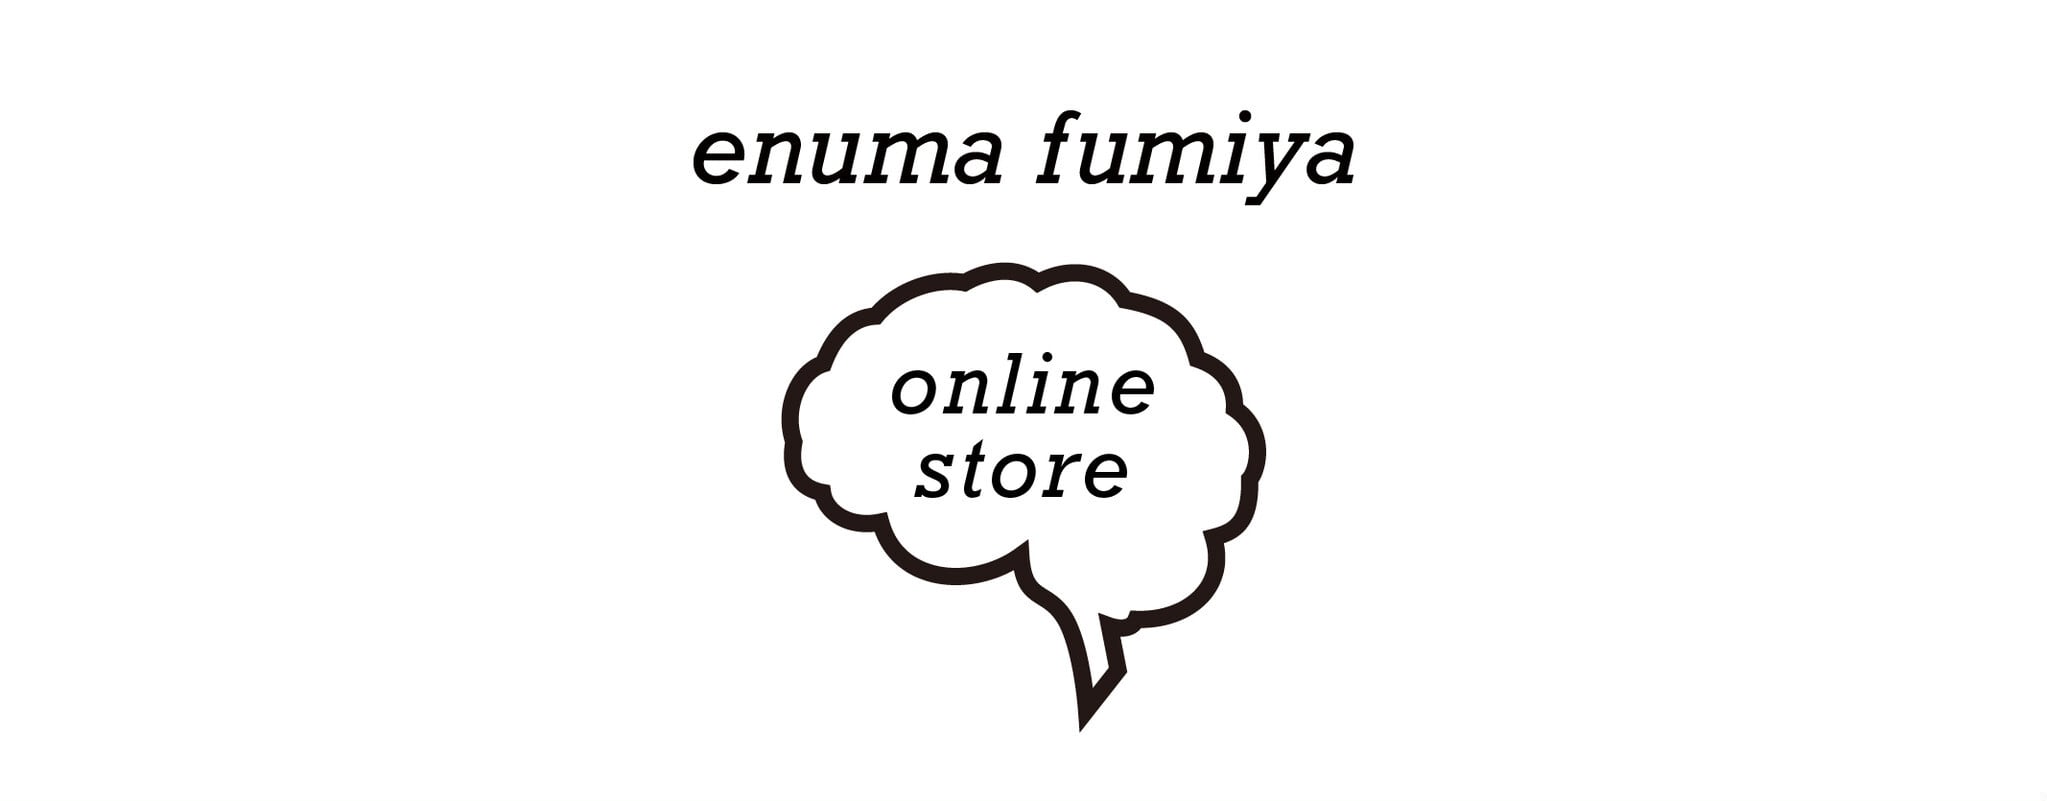 enuma fumiya online store